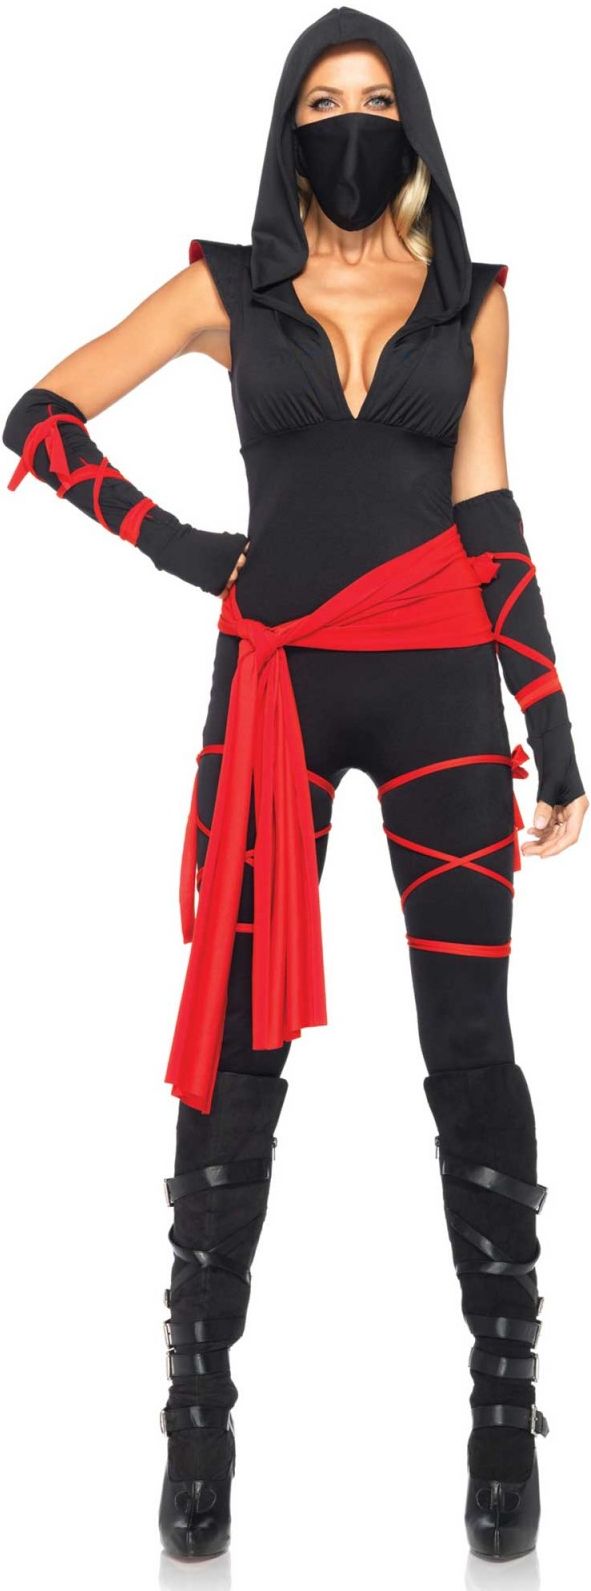 Sexy ninja outfit